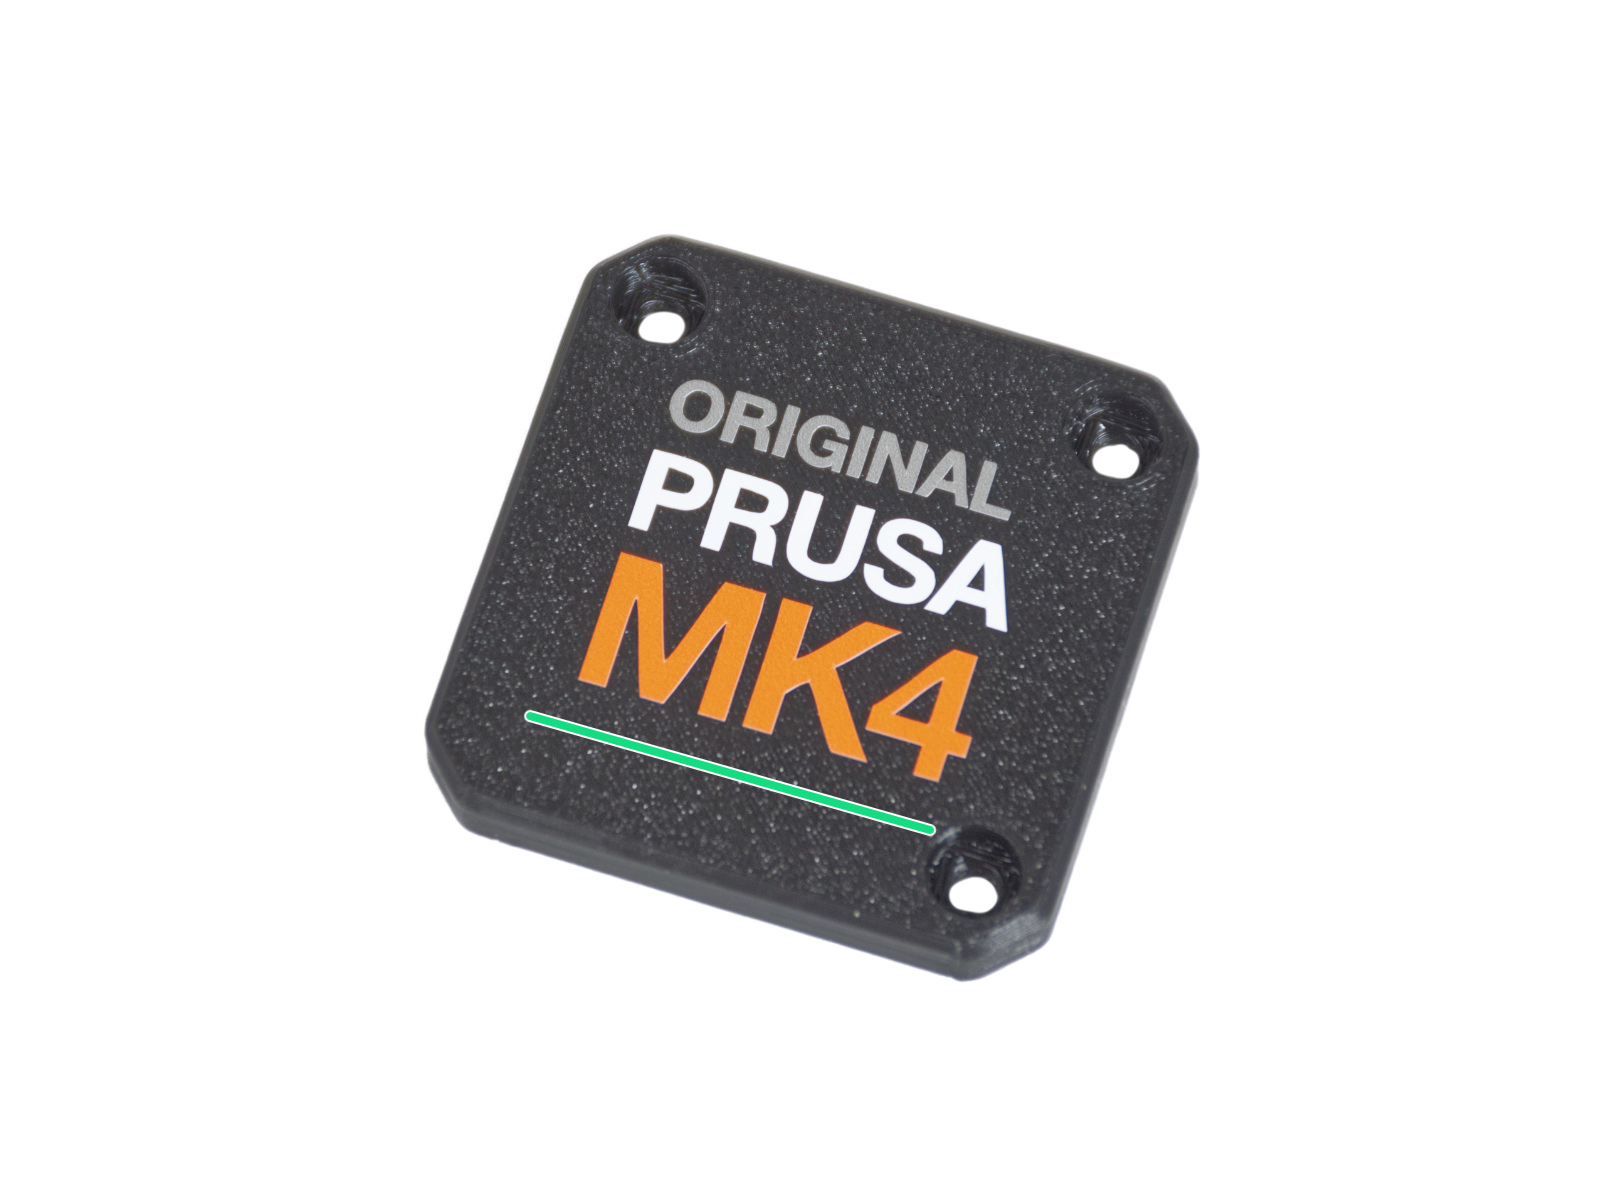 PG-case MK4 sticker (optional)